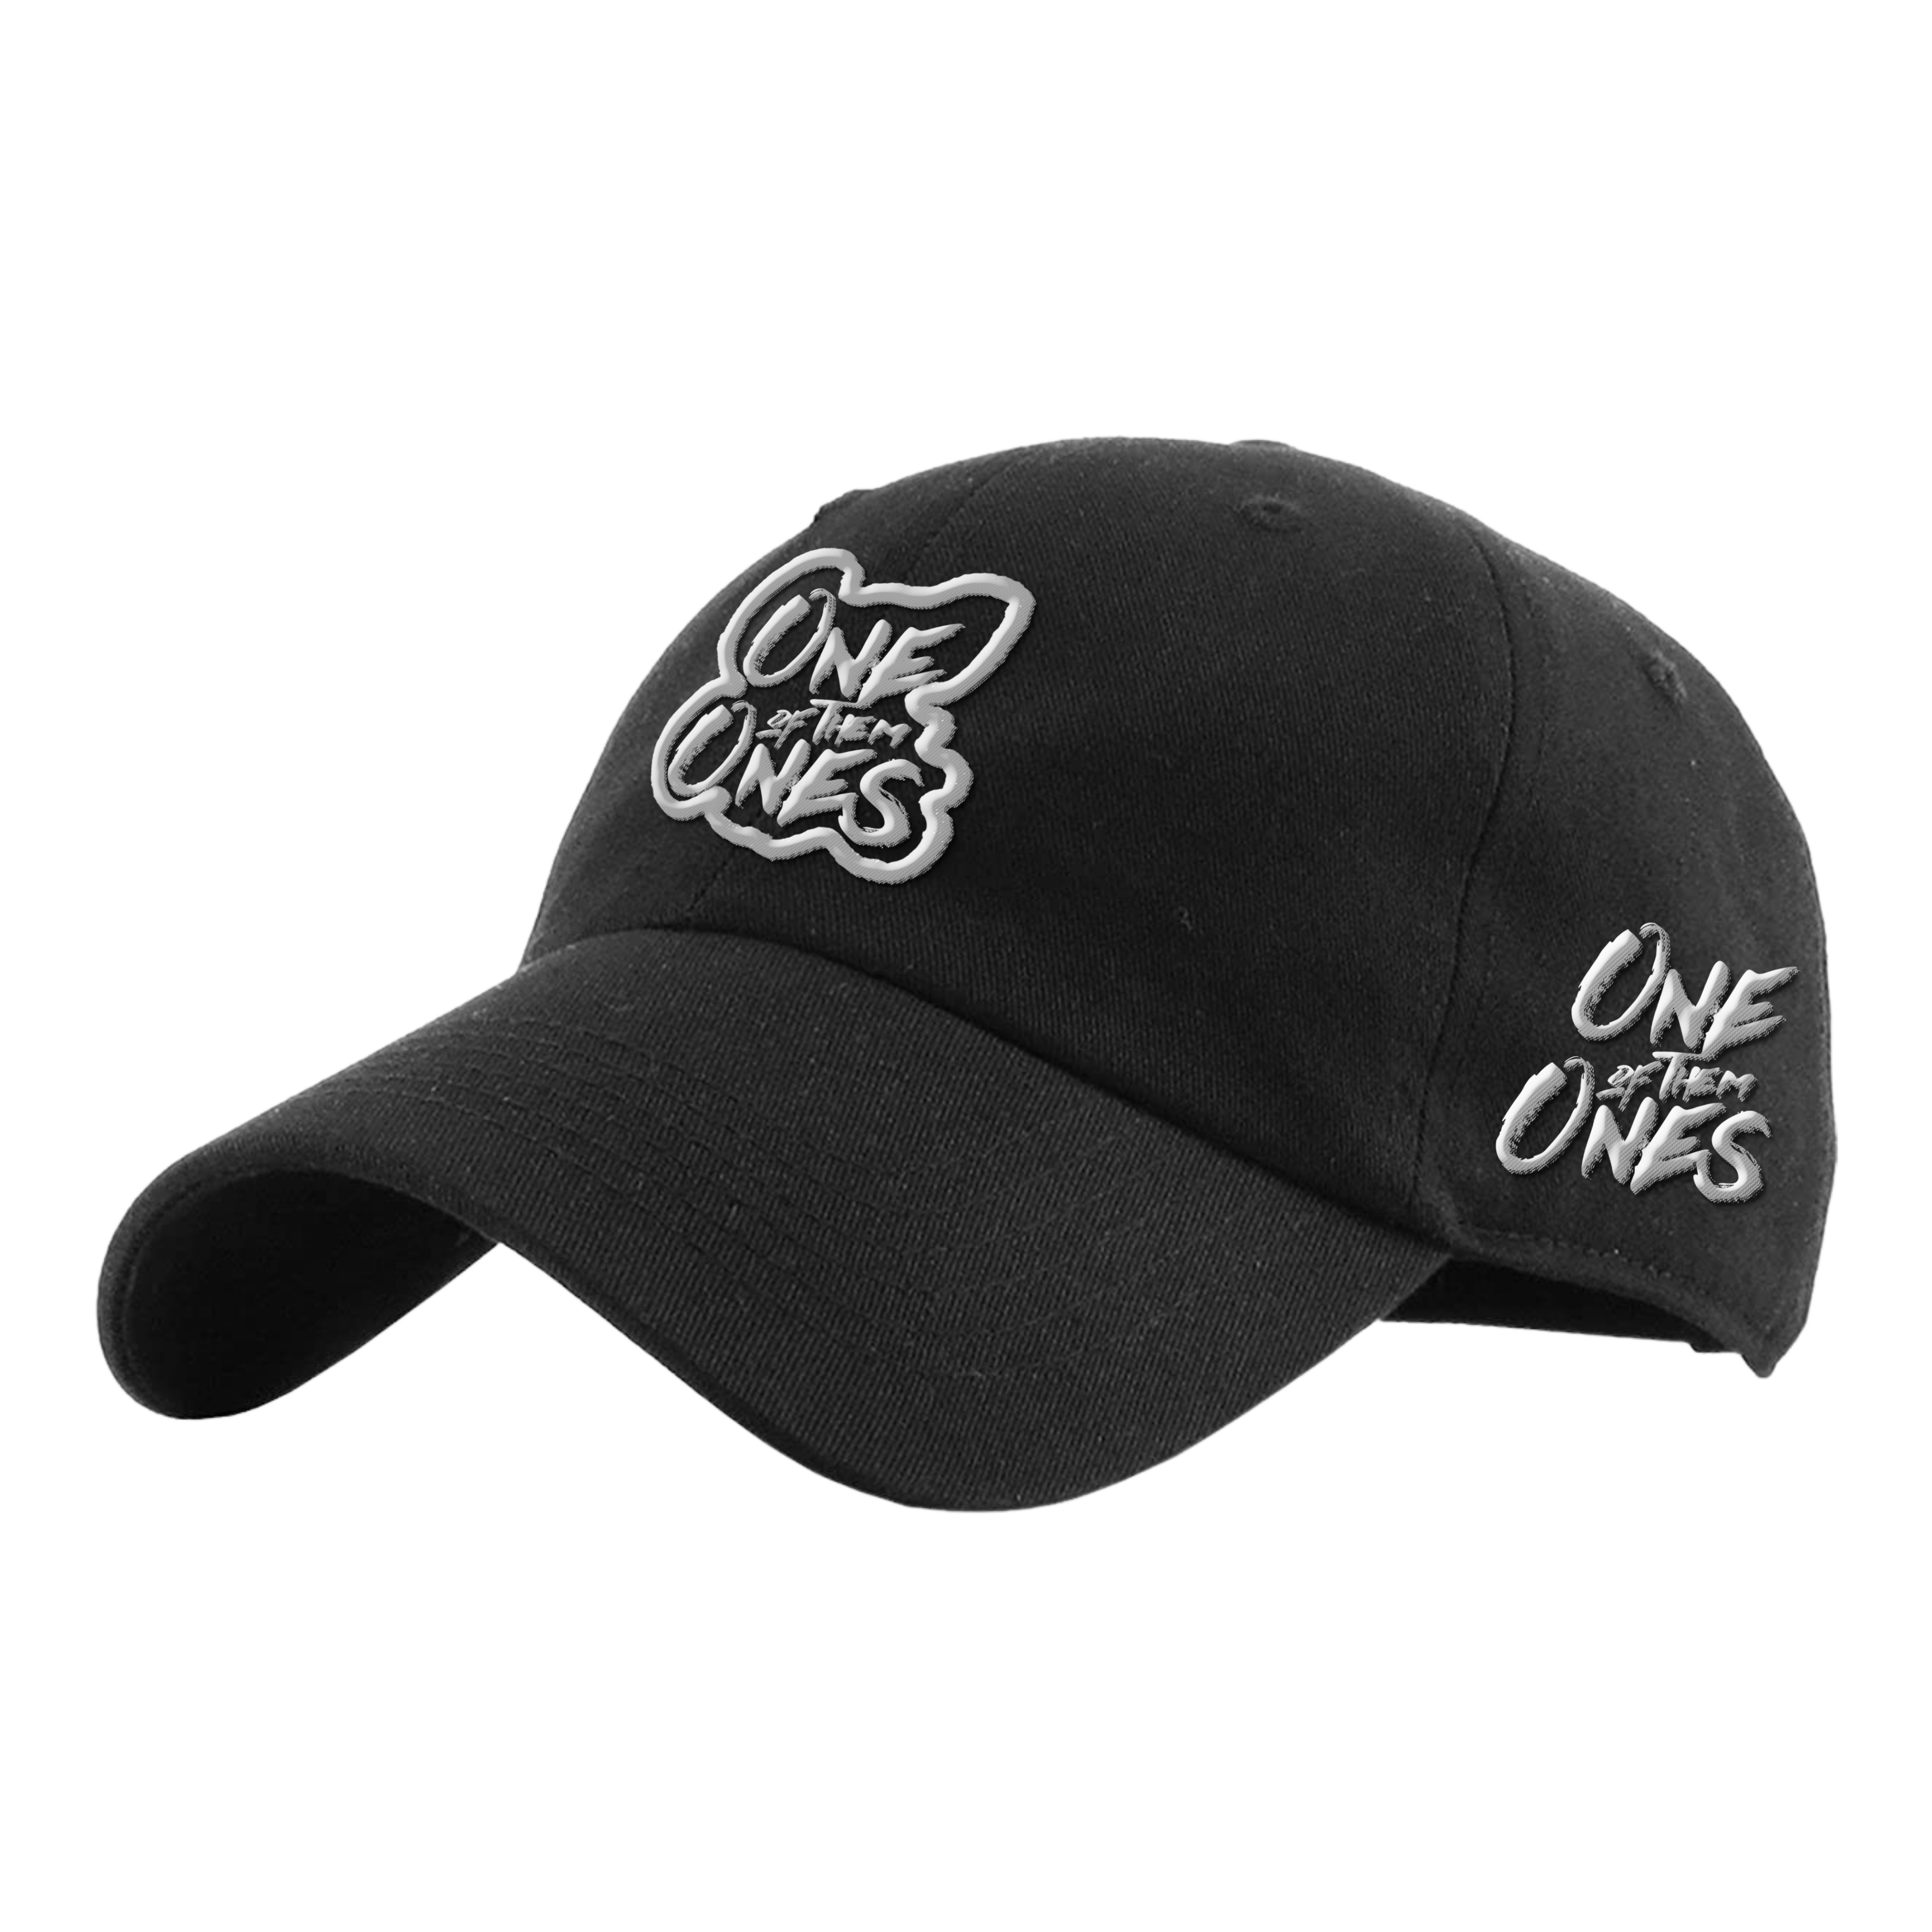 Organik Lyfestyle - 1OfThem1's OG White Dad Hat W/Side Embroidery